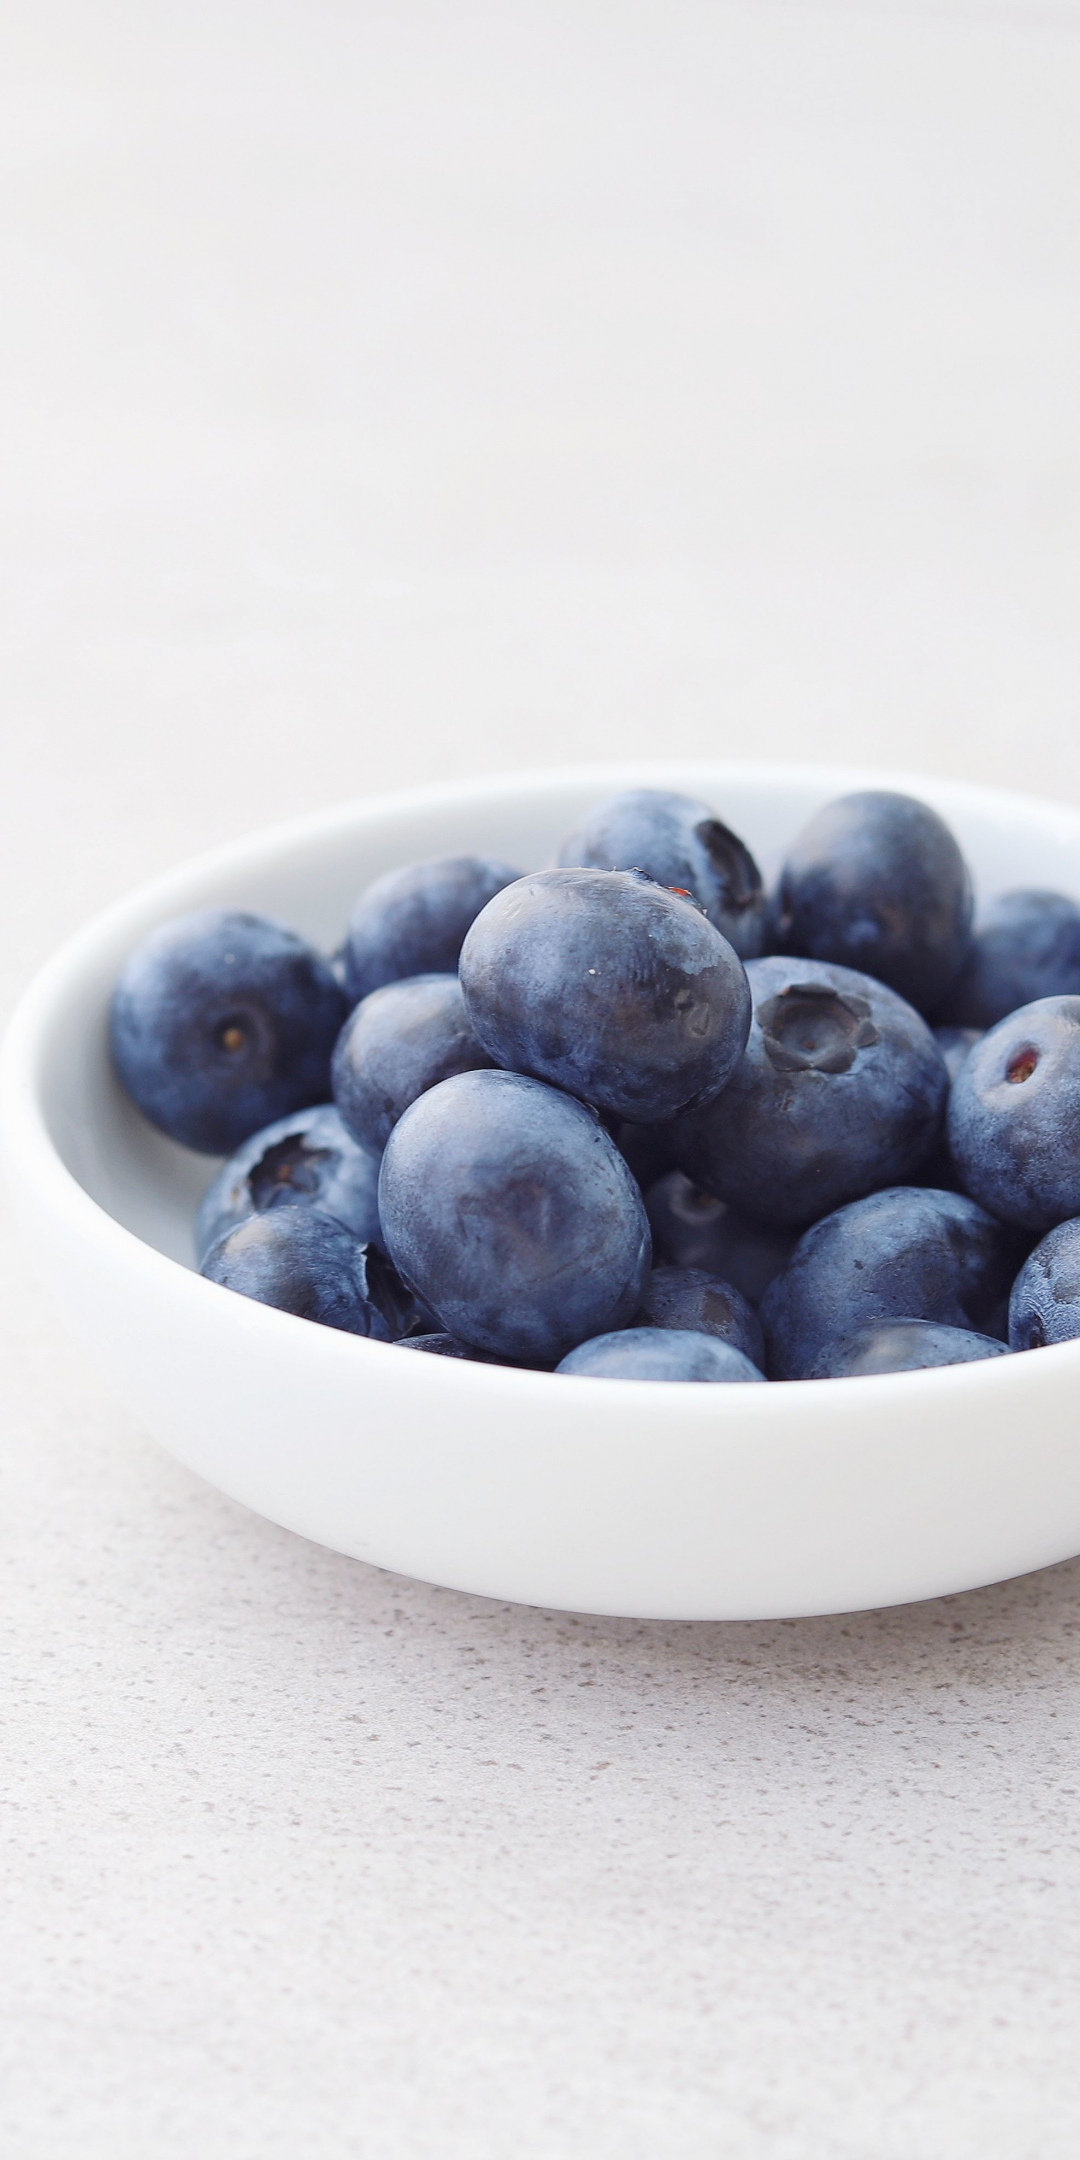 Minimal, bowl of blueberry, fruits, 1080x2160 wallpaper